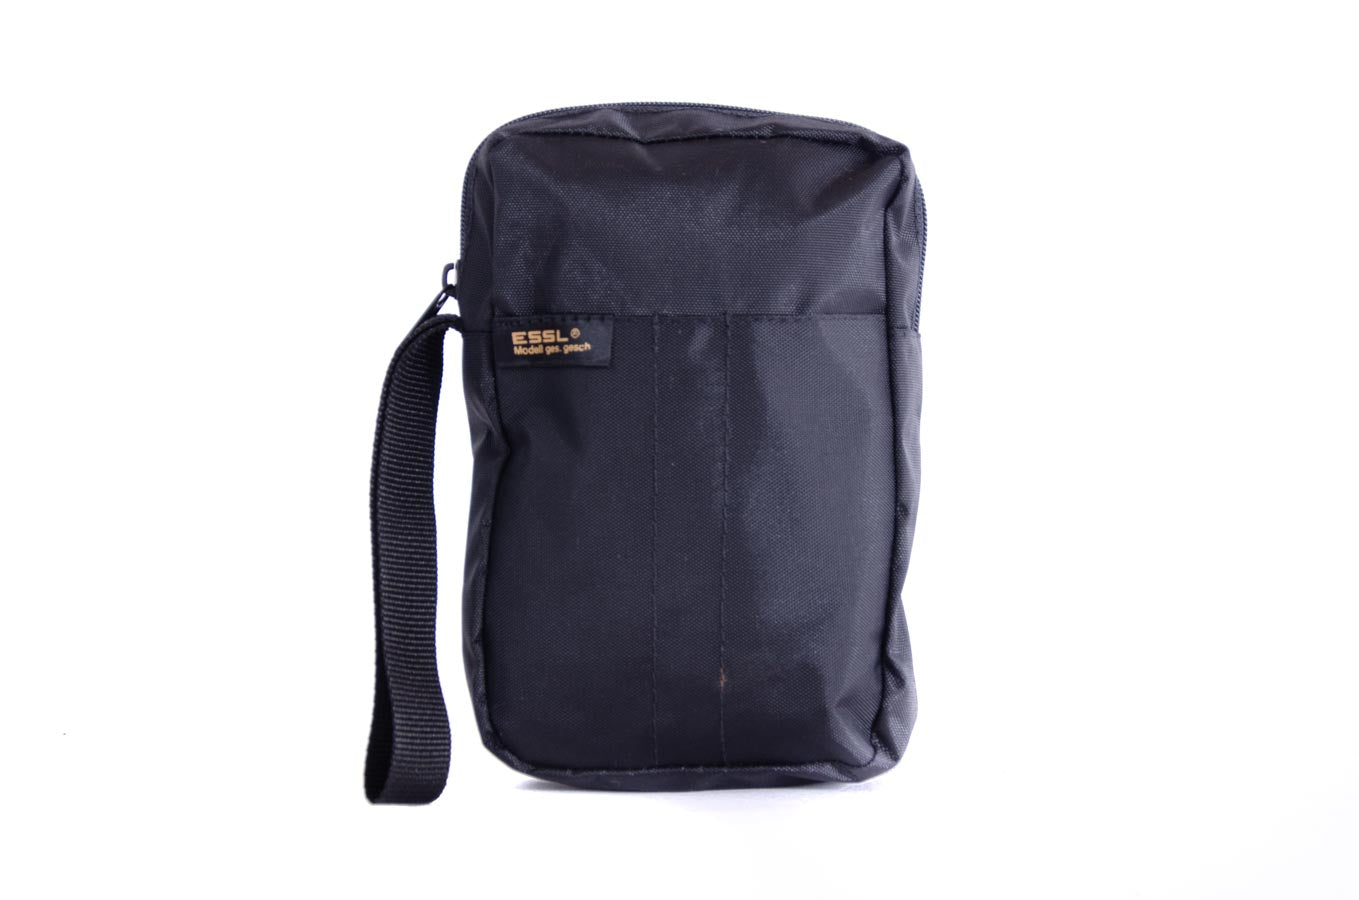 HT01 handbag, hip bag black